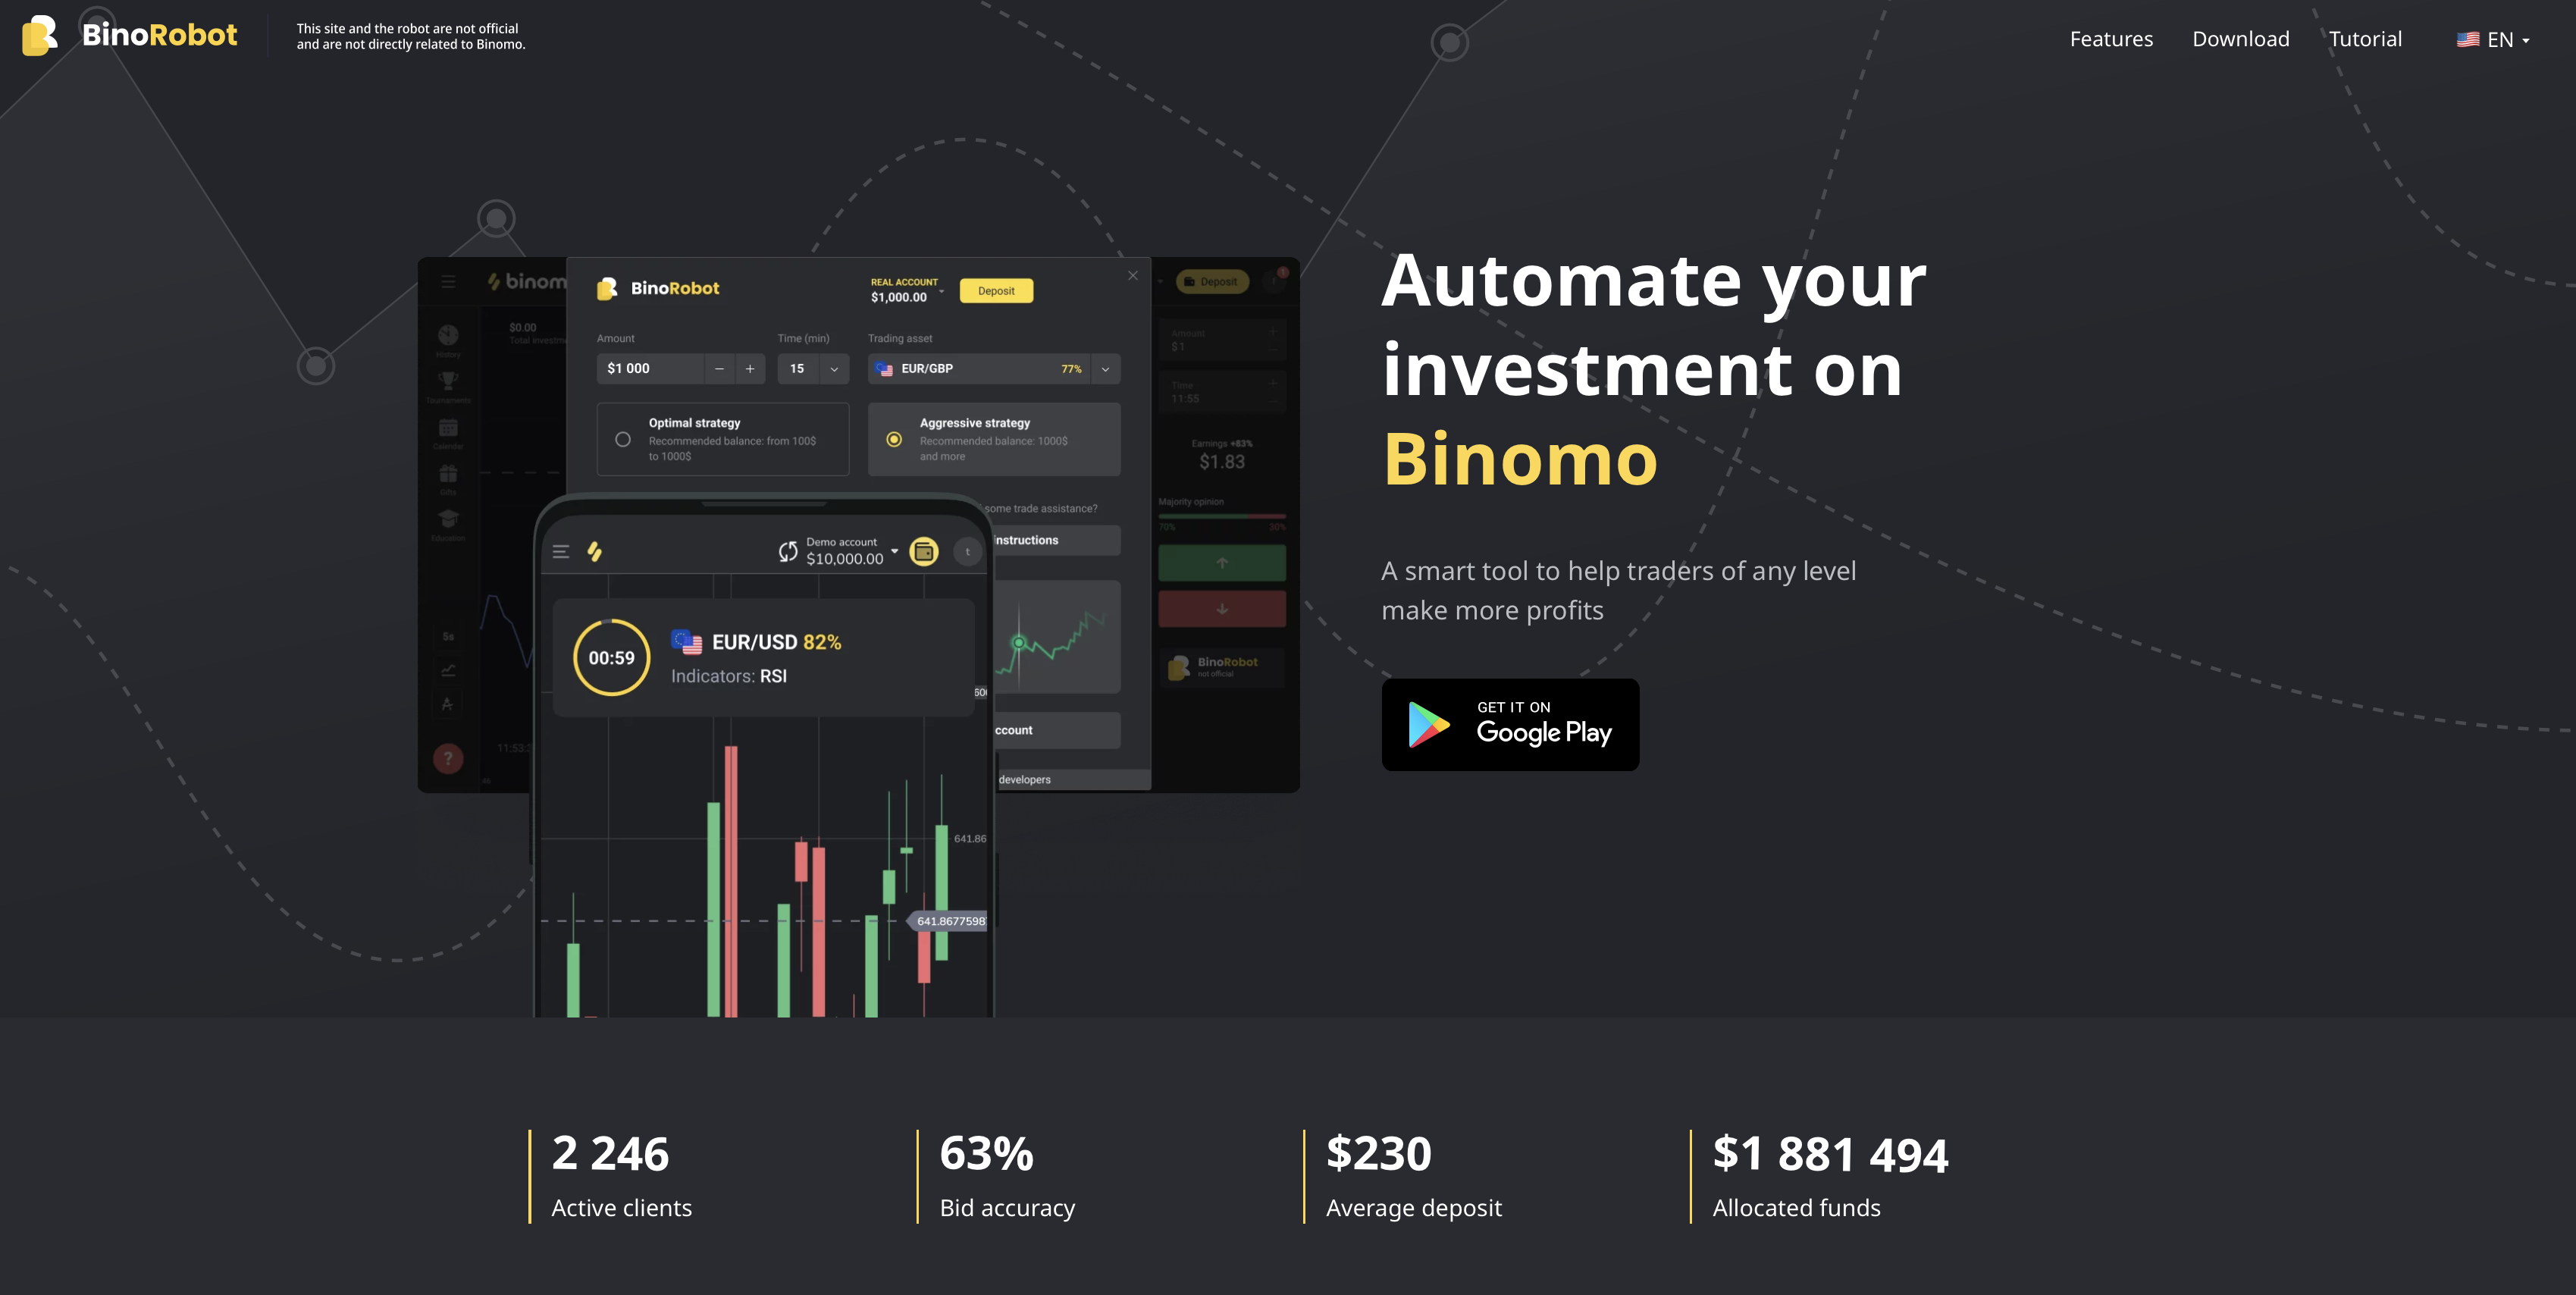 The BinoRobot - Binomo trading robot